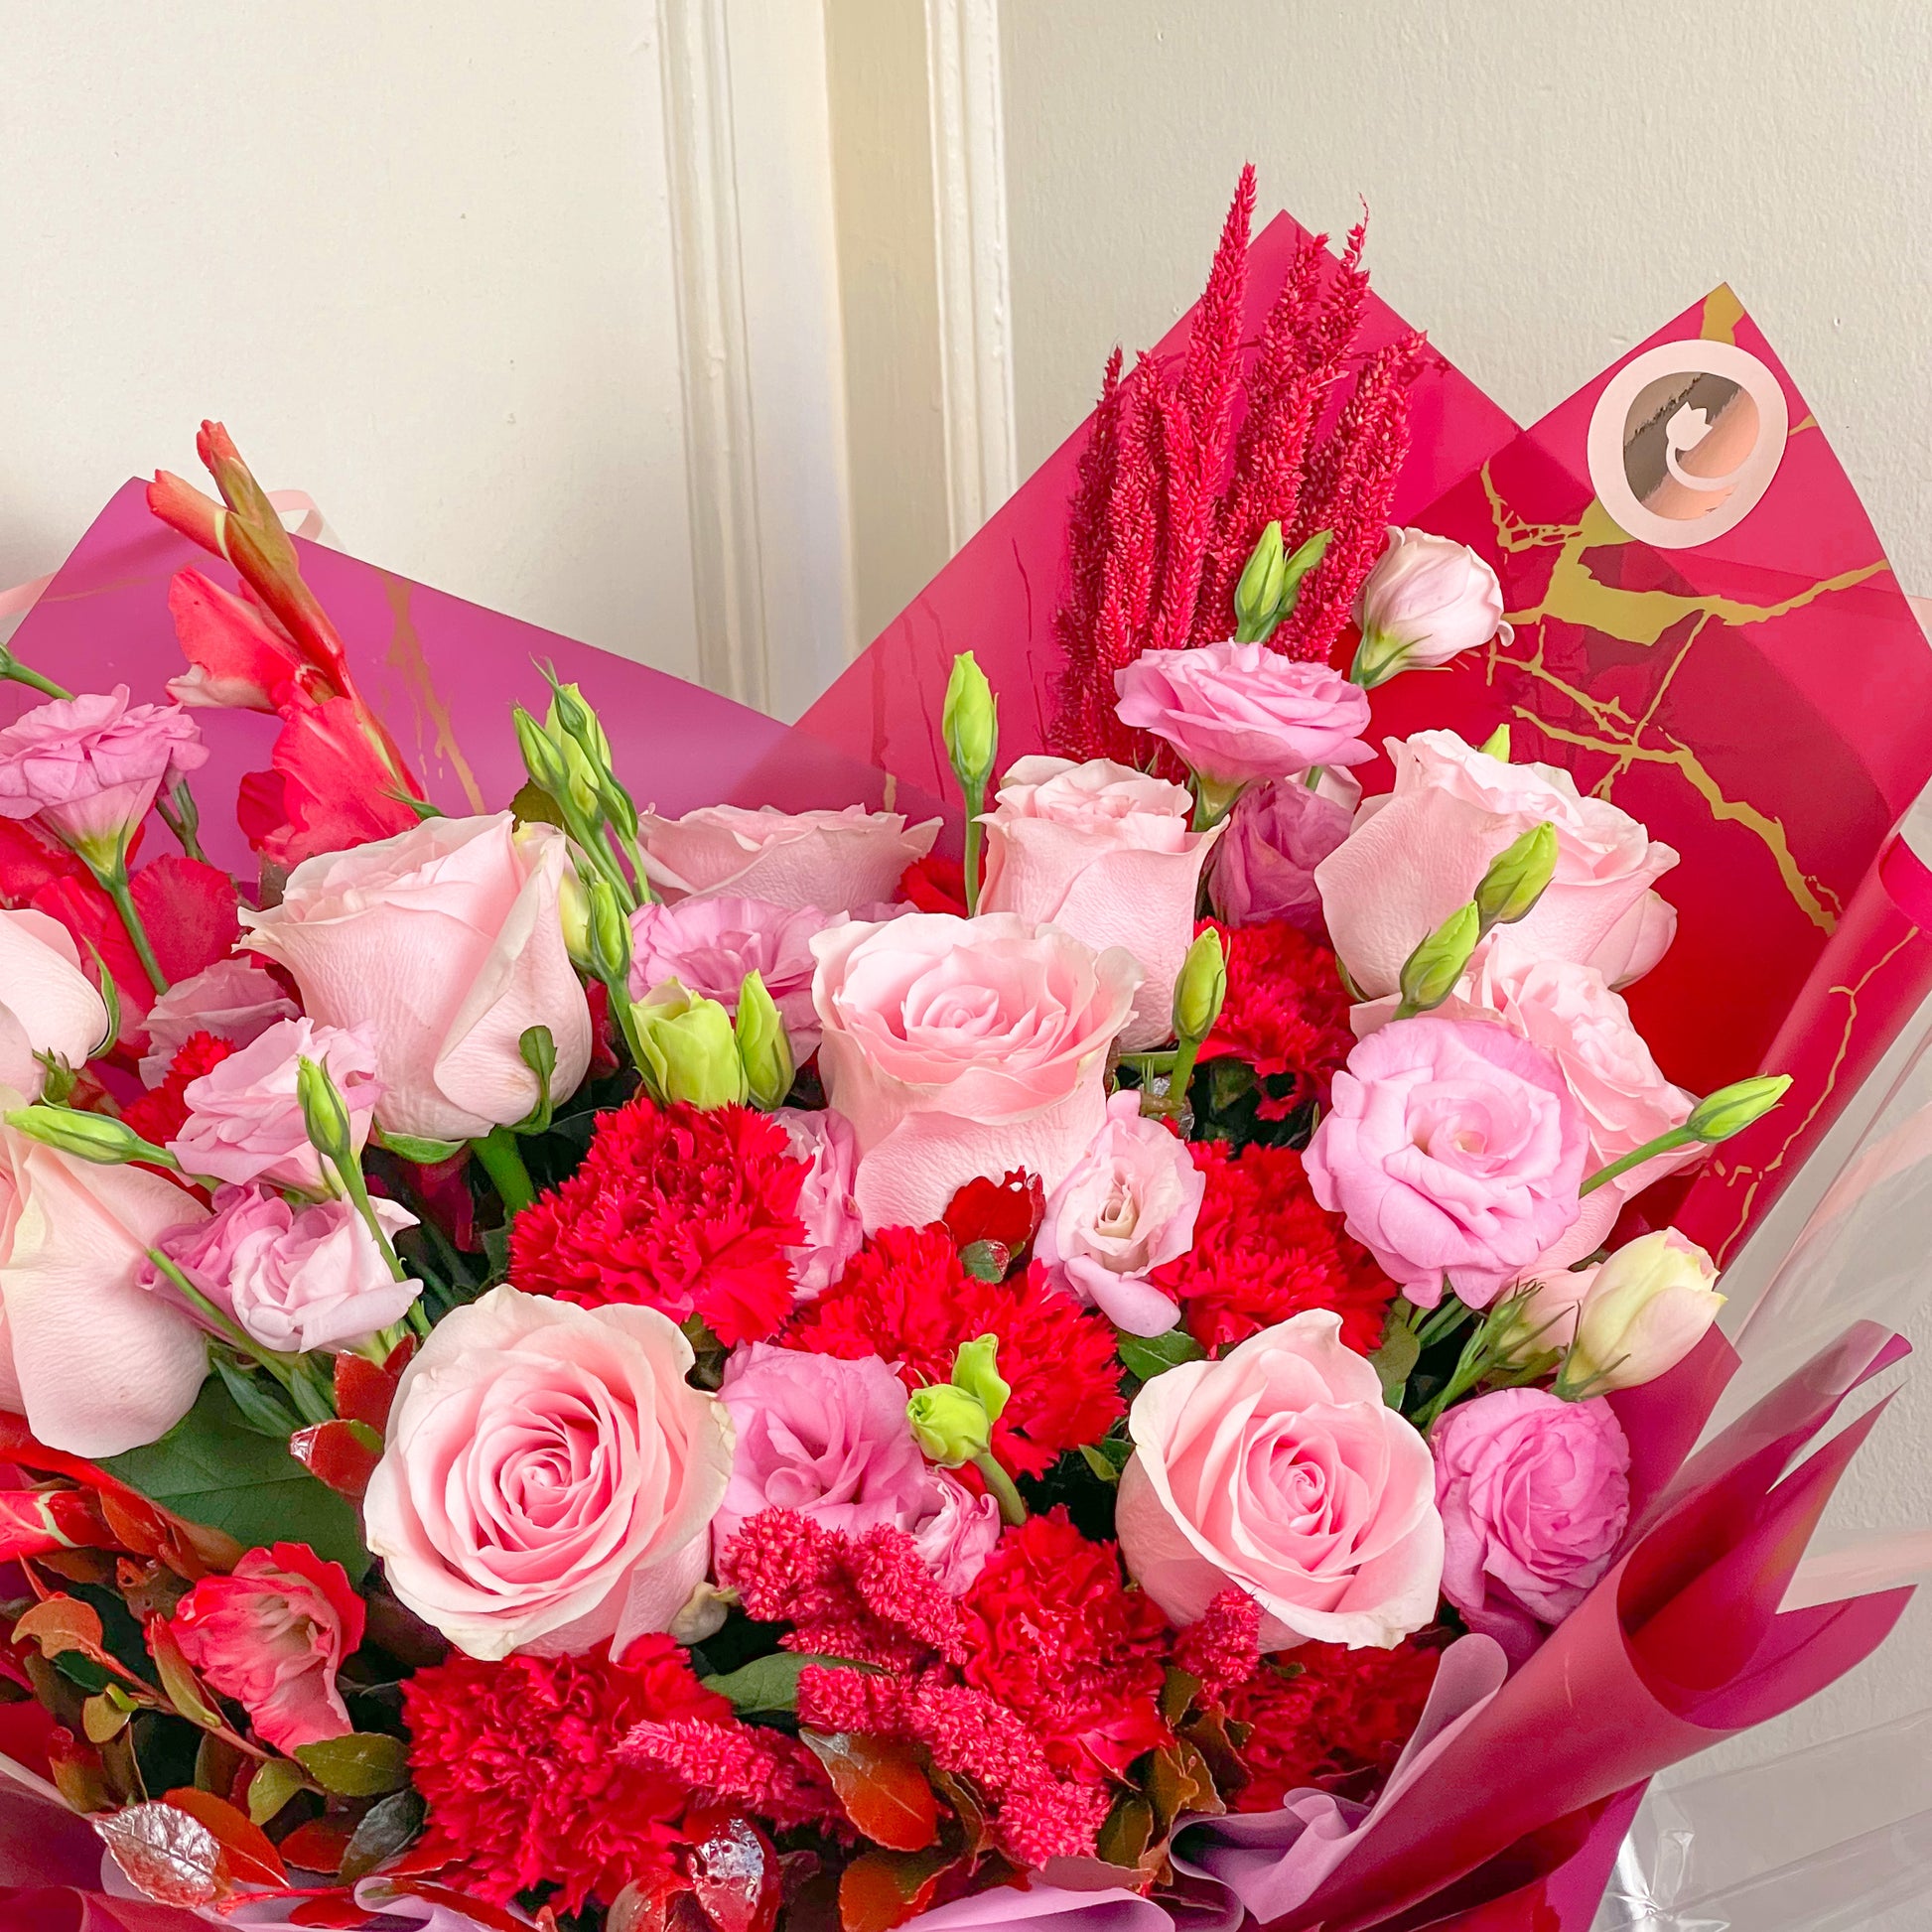 Elegance of Red and Pink Flowers | Elvy's Floral Design